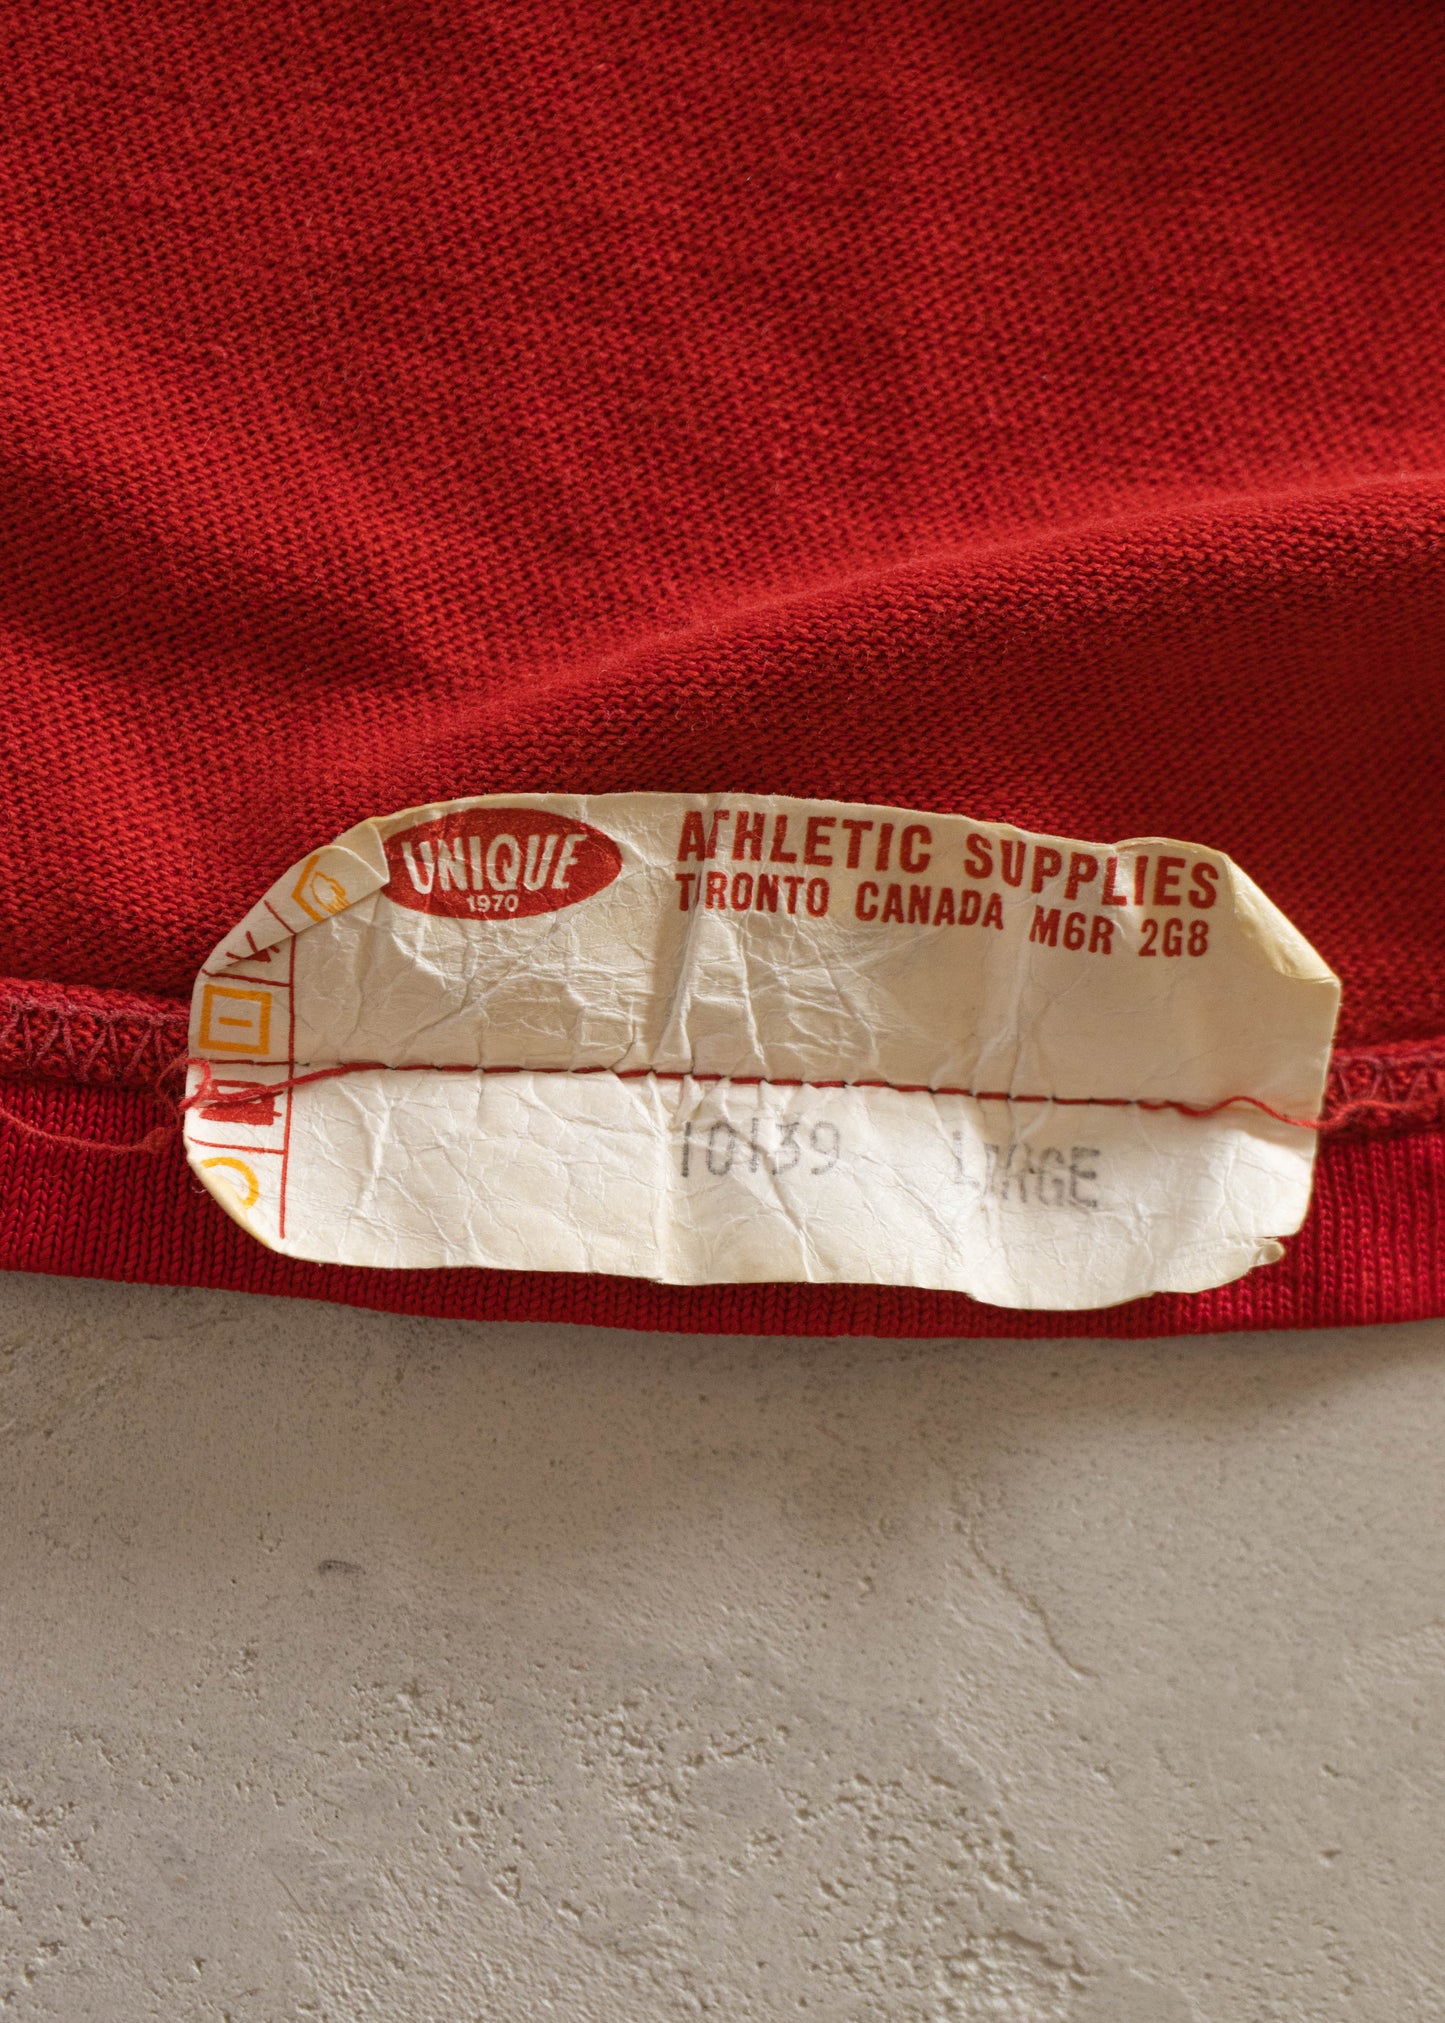 1980s Unique Athletic Supplies Long Sleeve Sport Jersey Size M/L